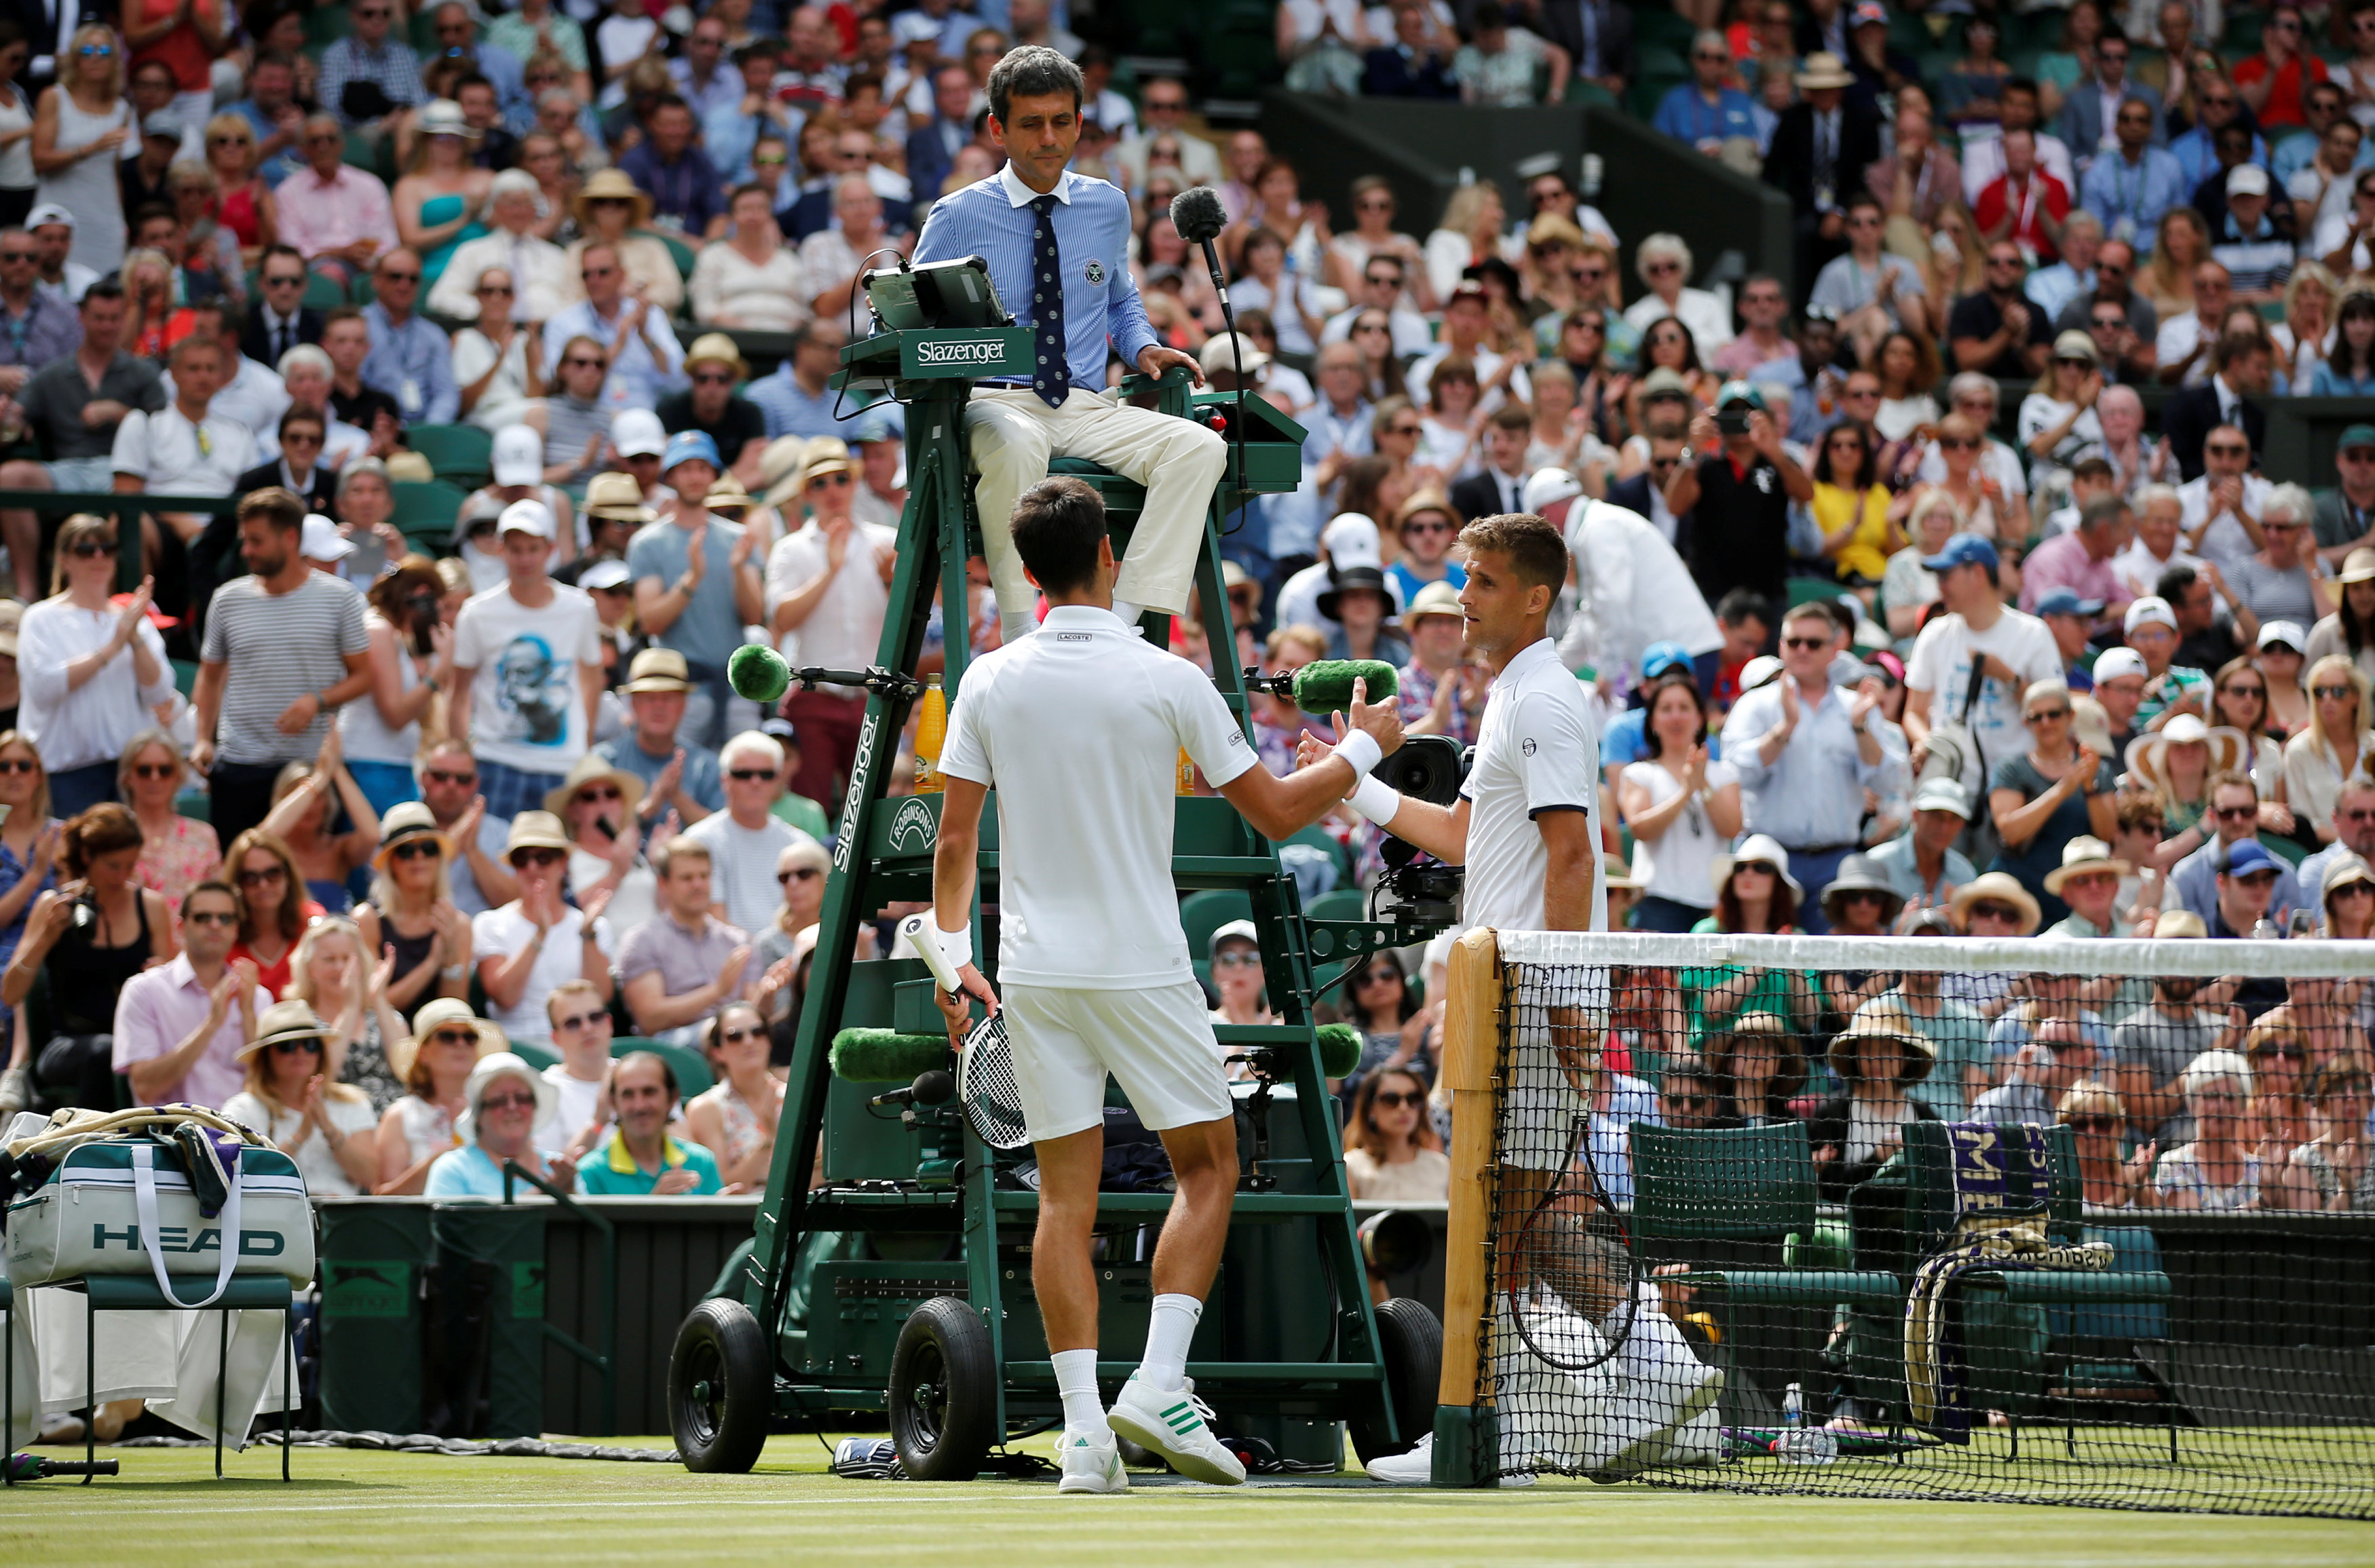 Tennis: Djokovic into second round of Wimbledon as Klizan retires injured